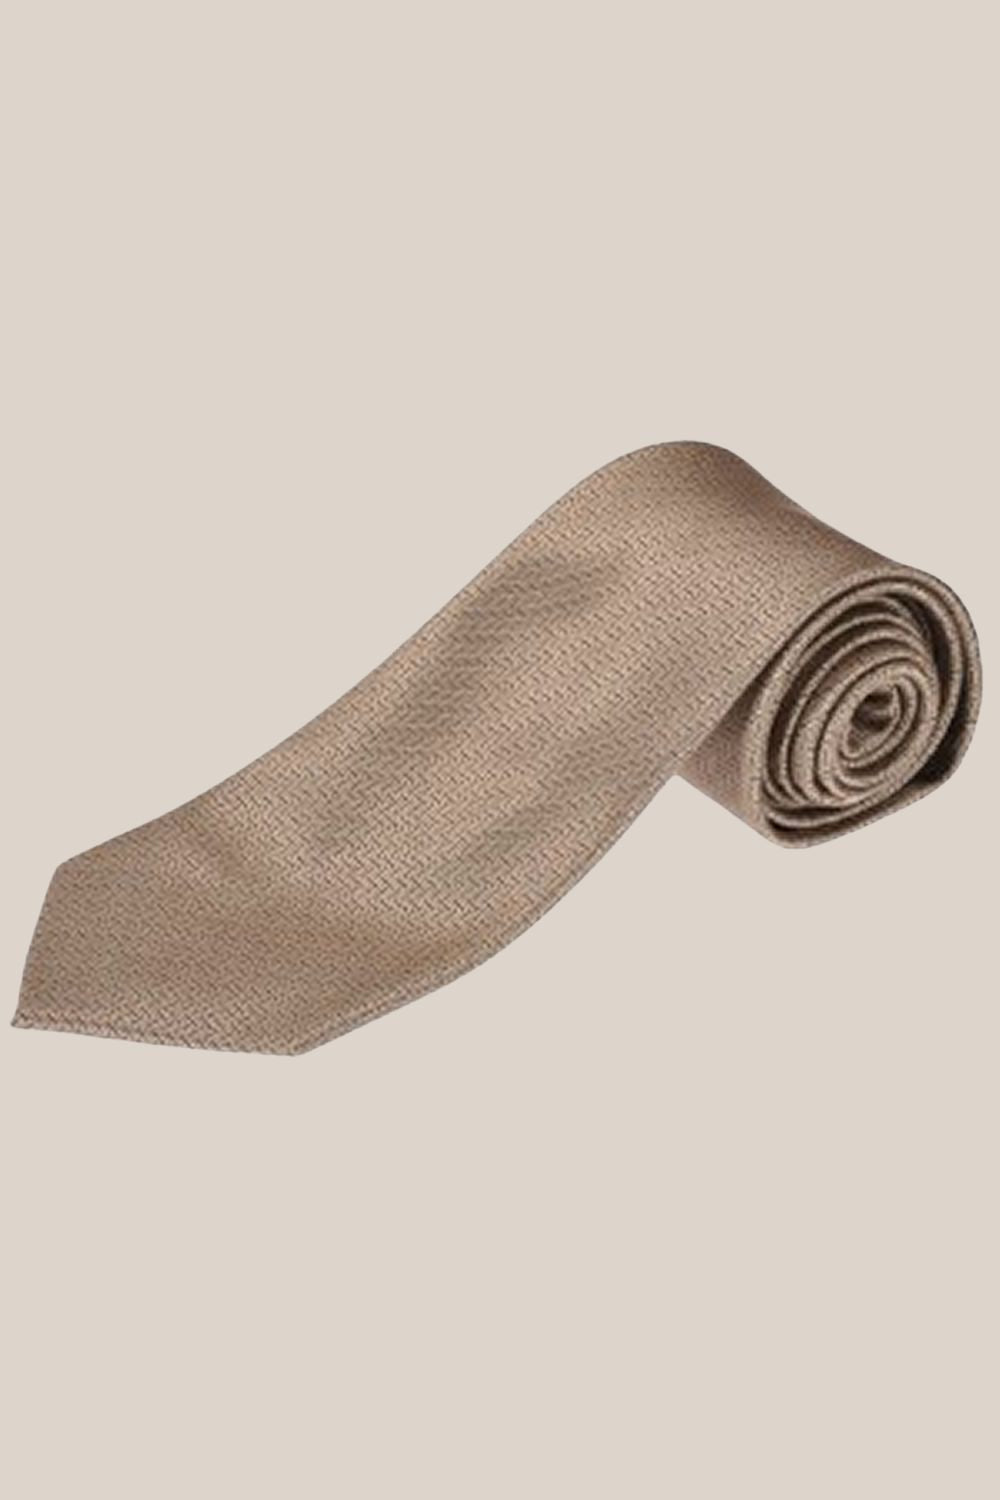 Formalaties Slim Herringbone Tie